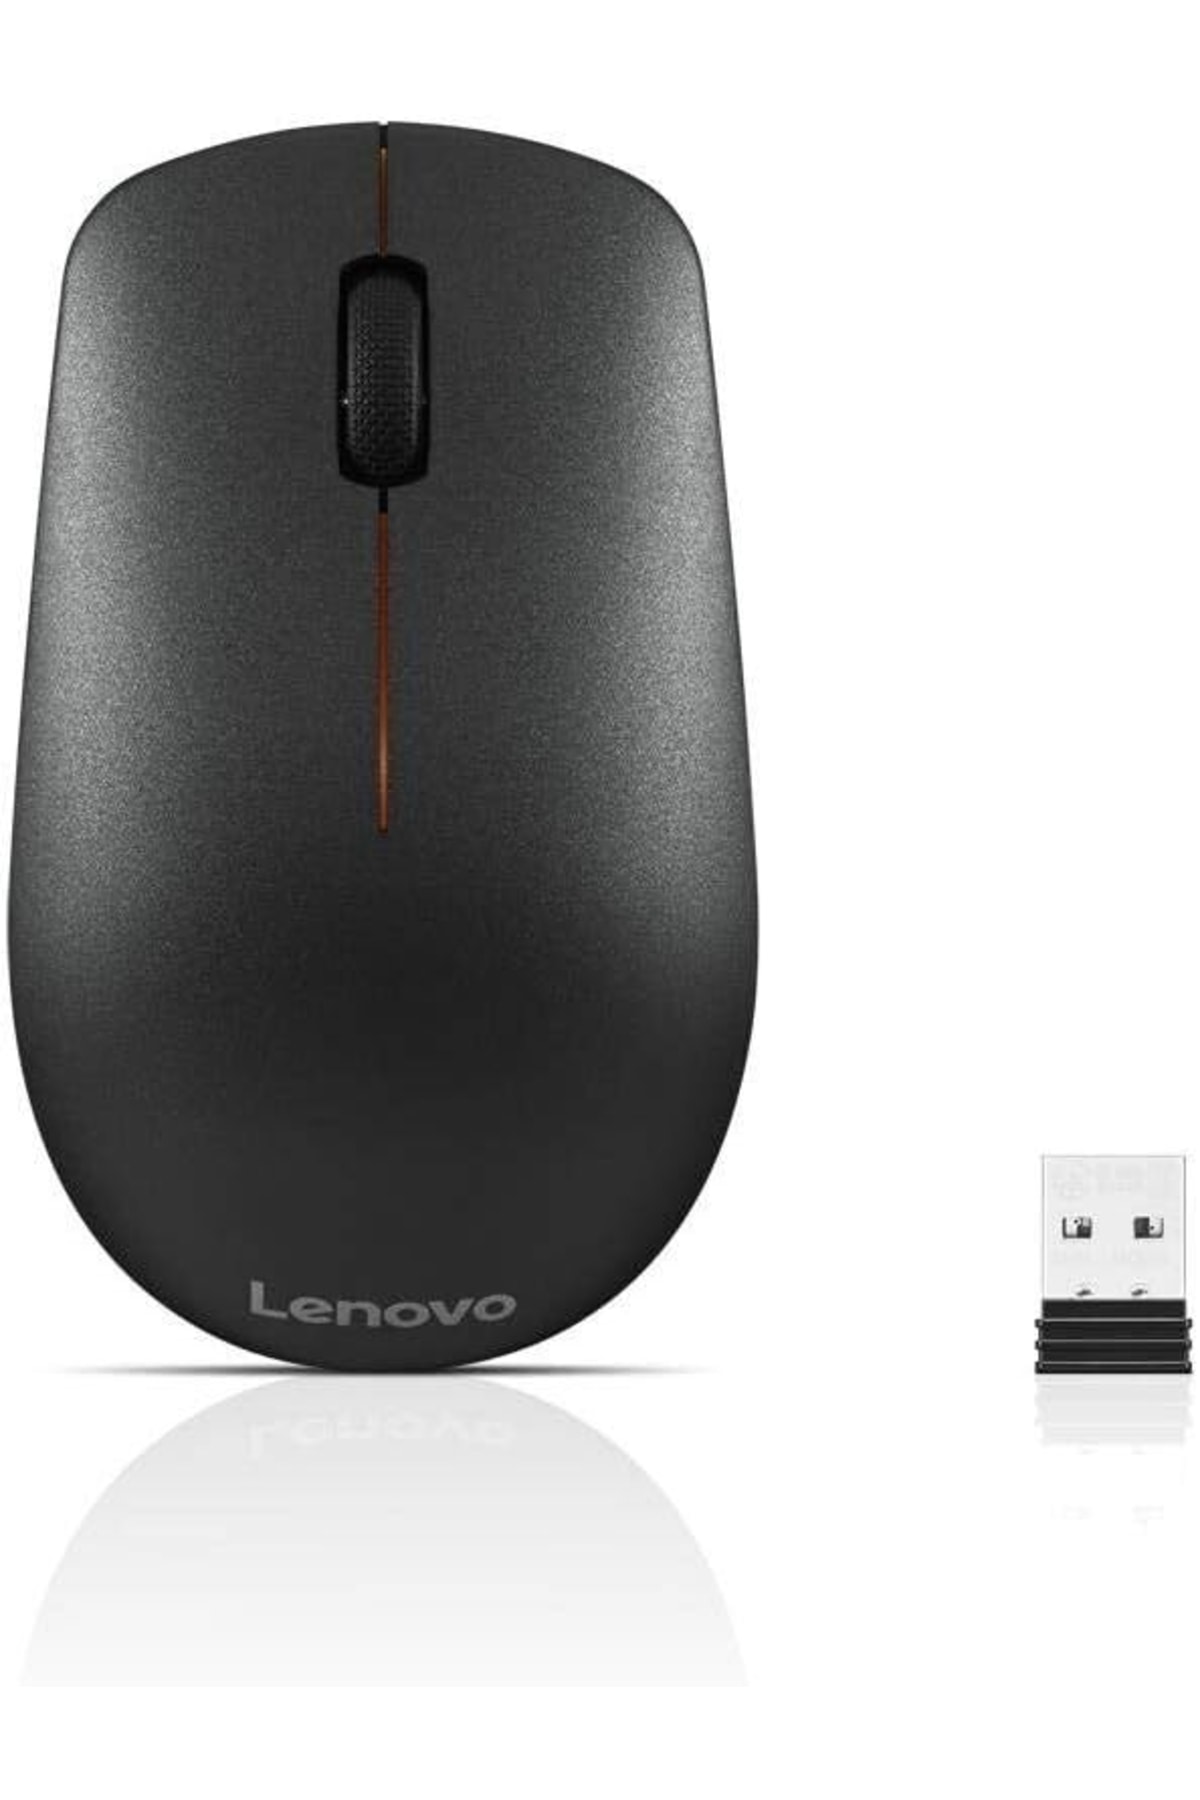 LENOVO 400 Wireless Kablosuz Mouse Siyah GY50R91293